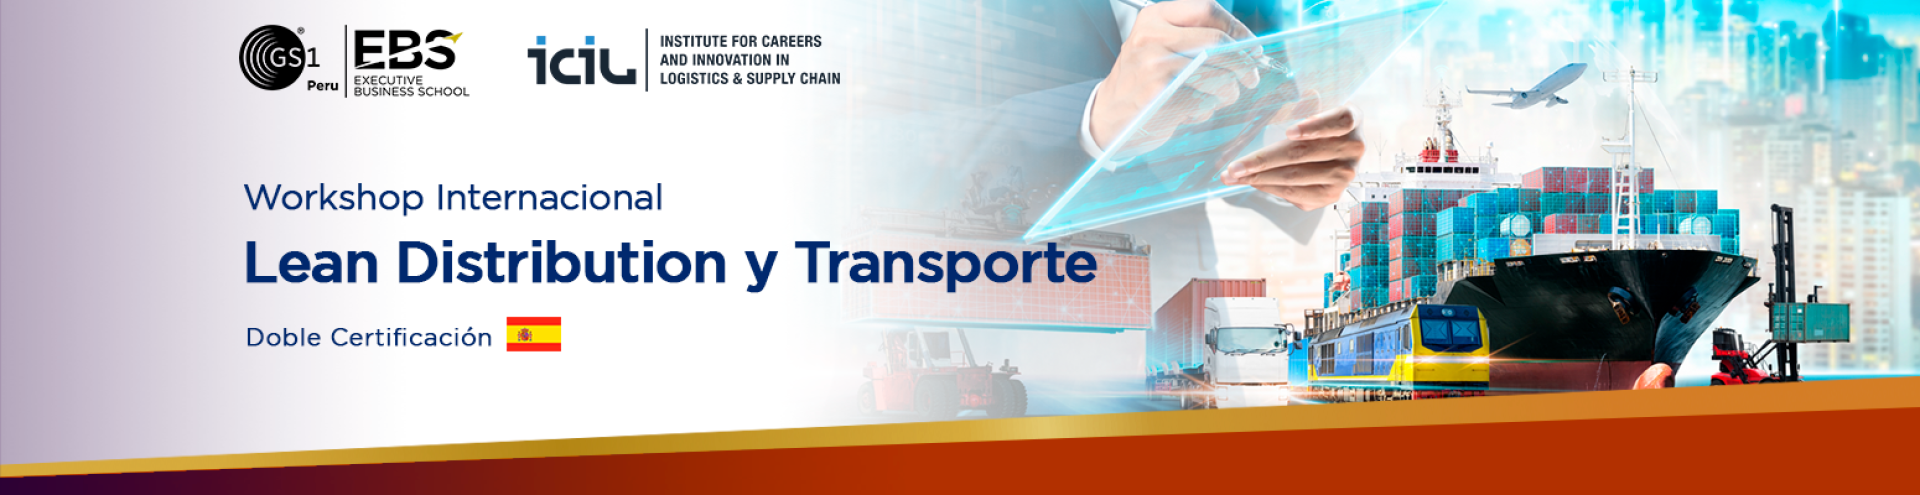 Workshop Internacional Lean Distribution y Transporte